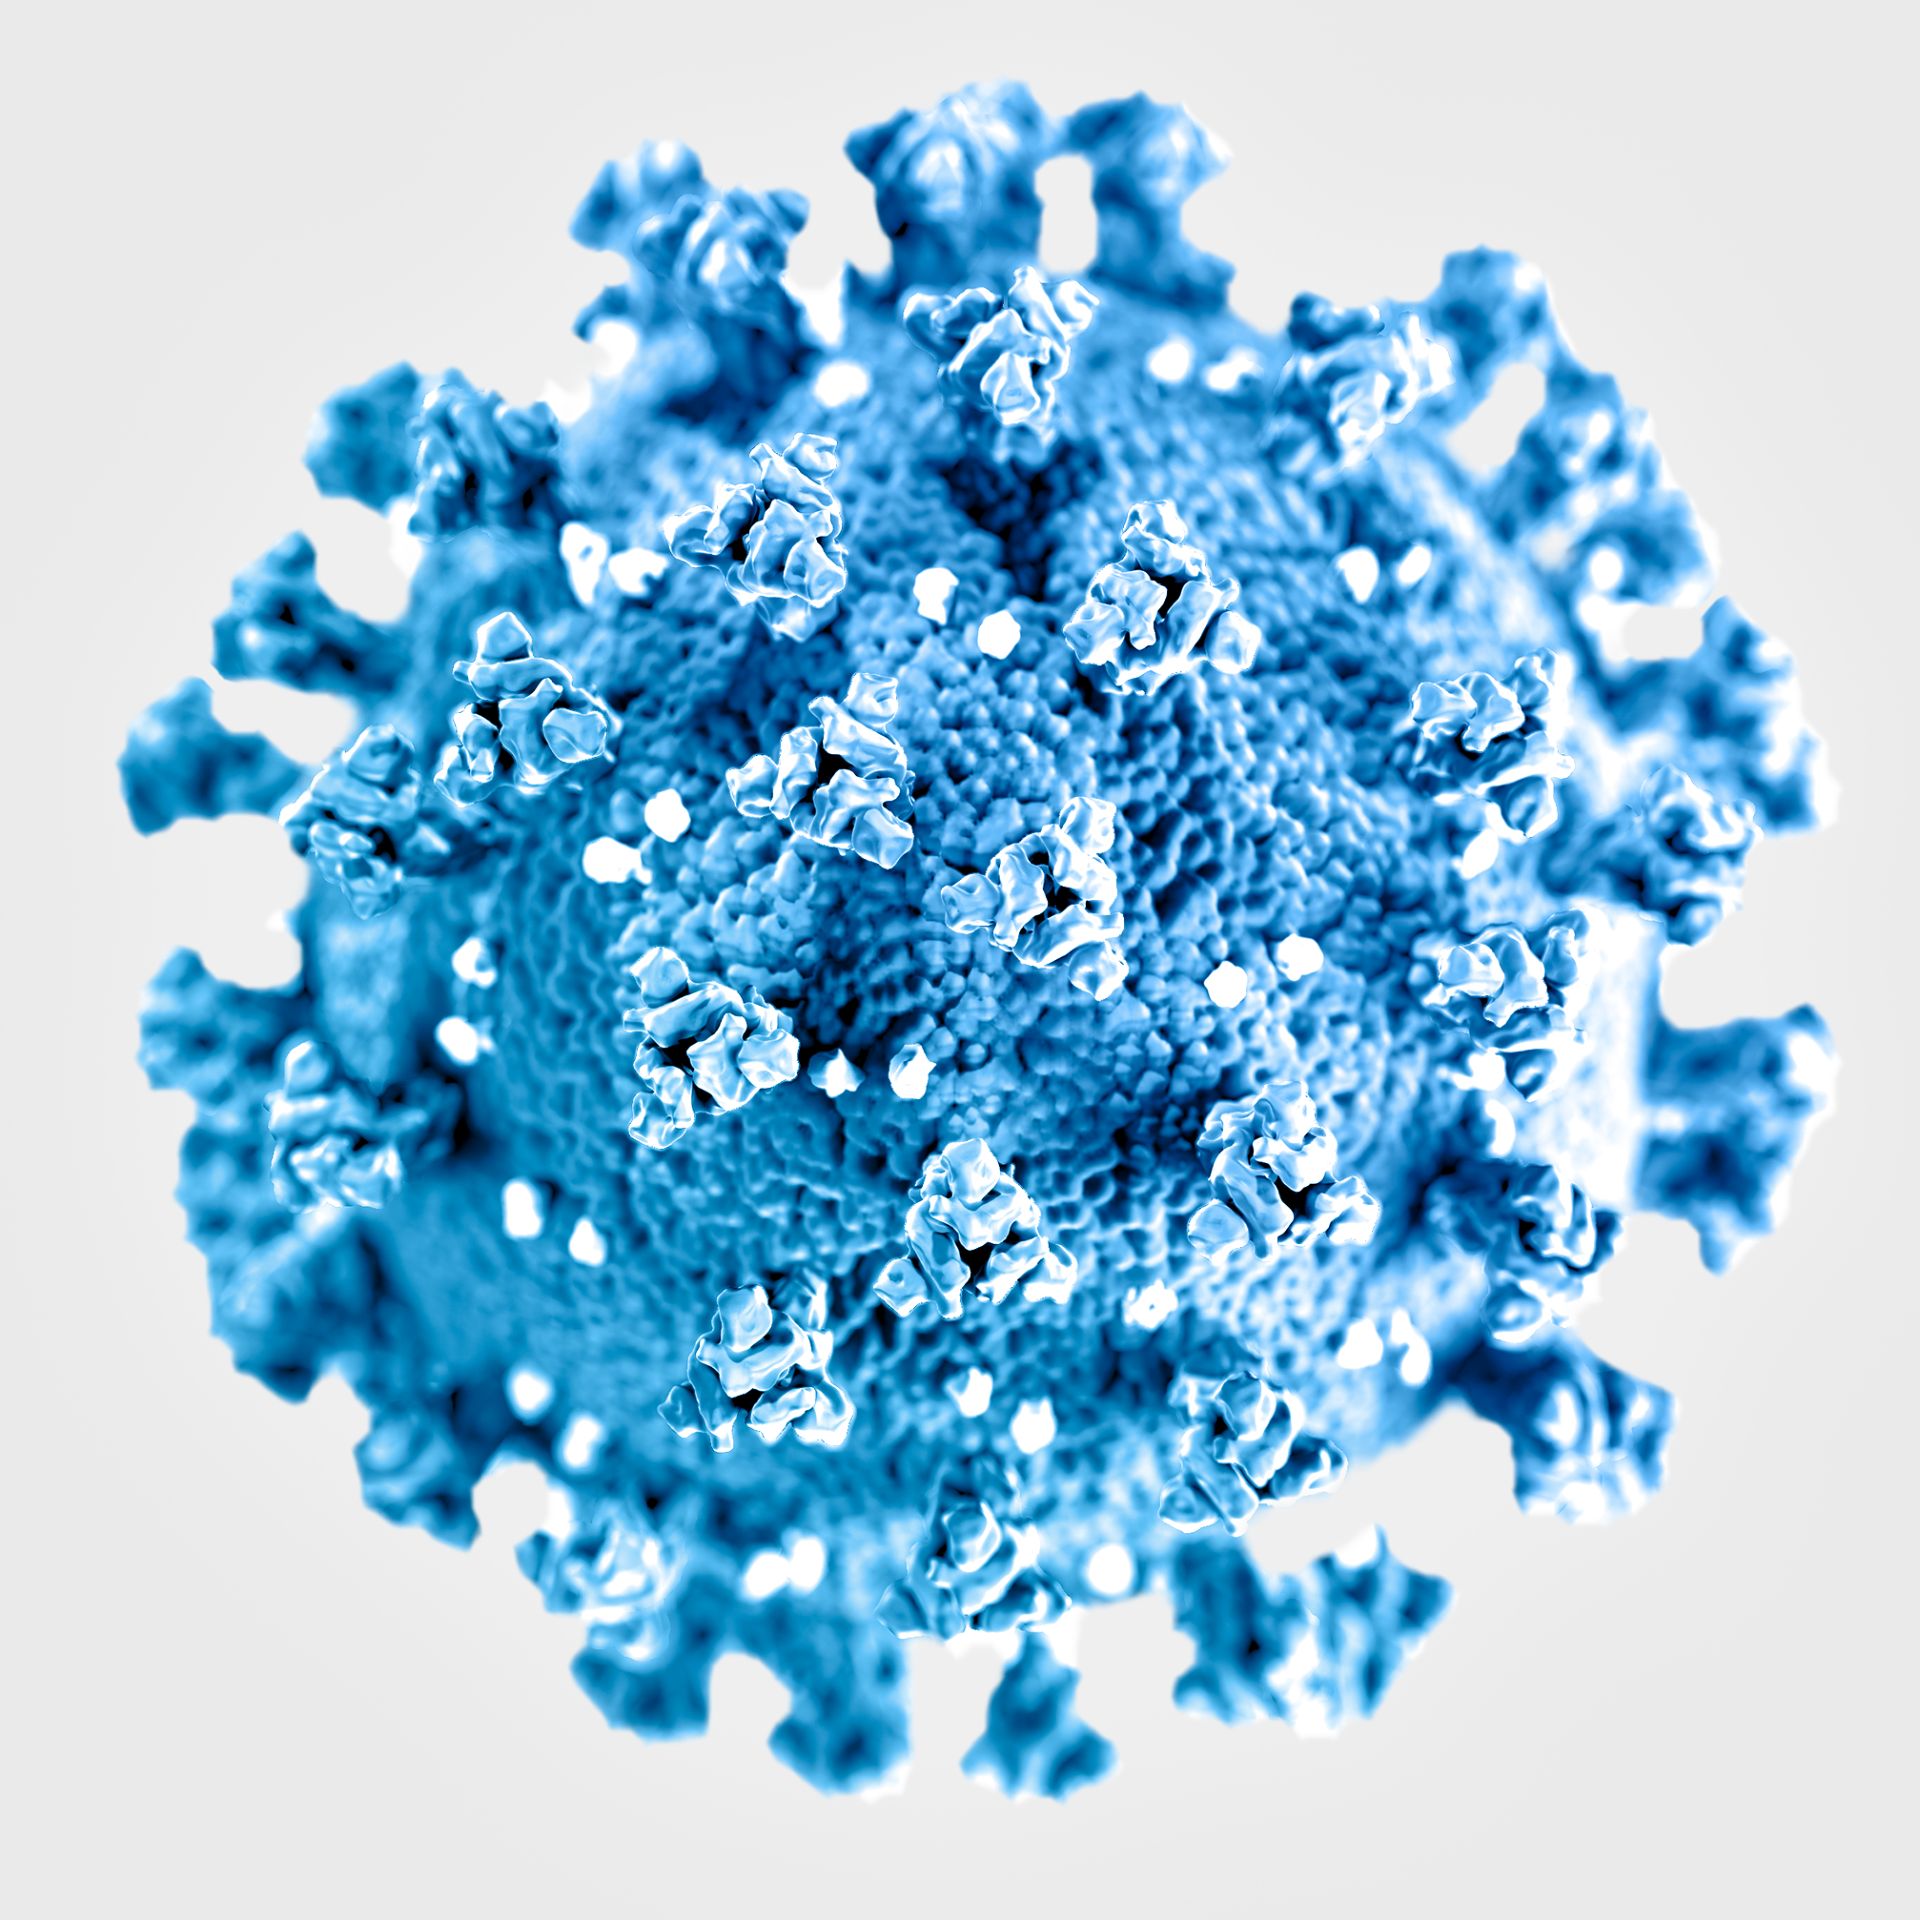 Imunitatea de la anticorpii anti-COVID-19 ar putea dura doar luni